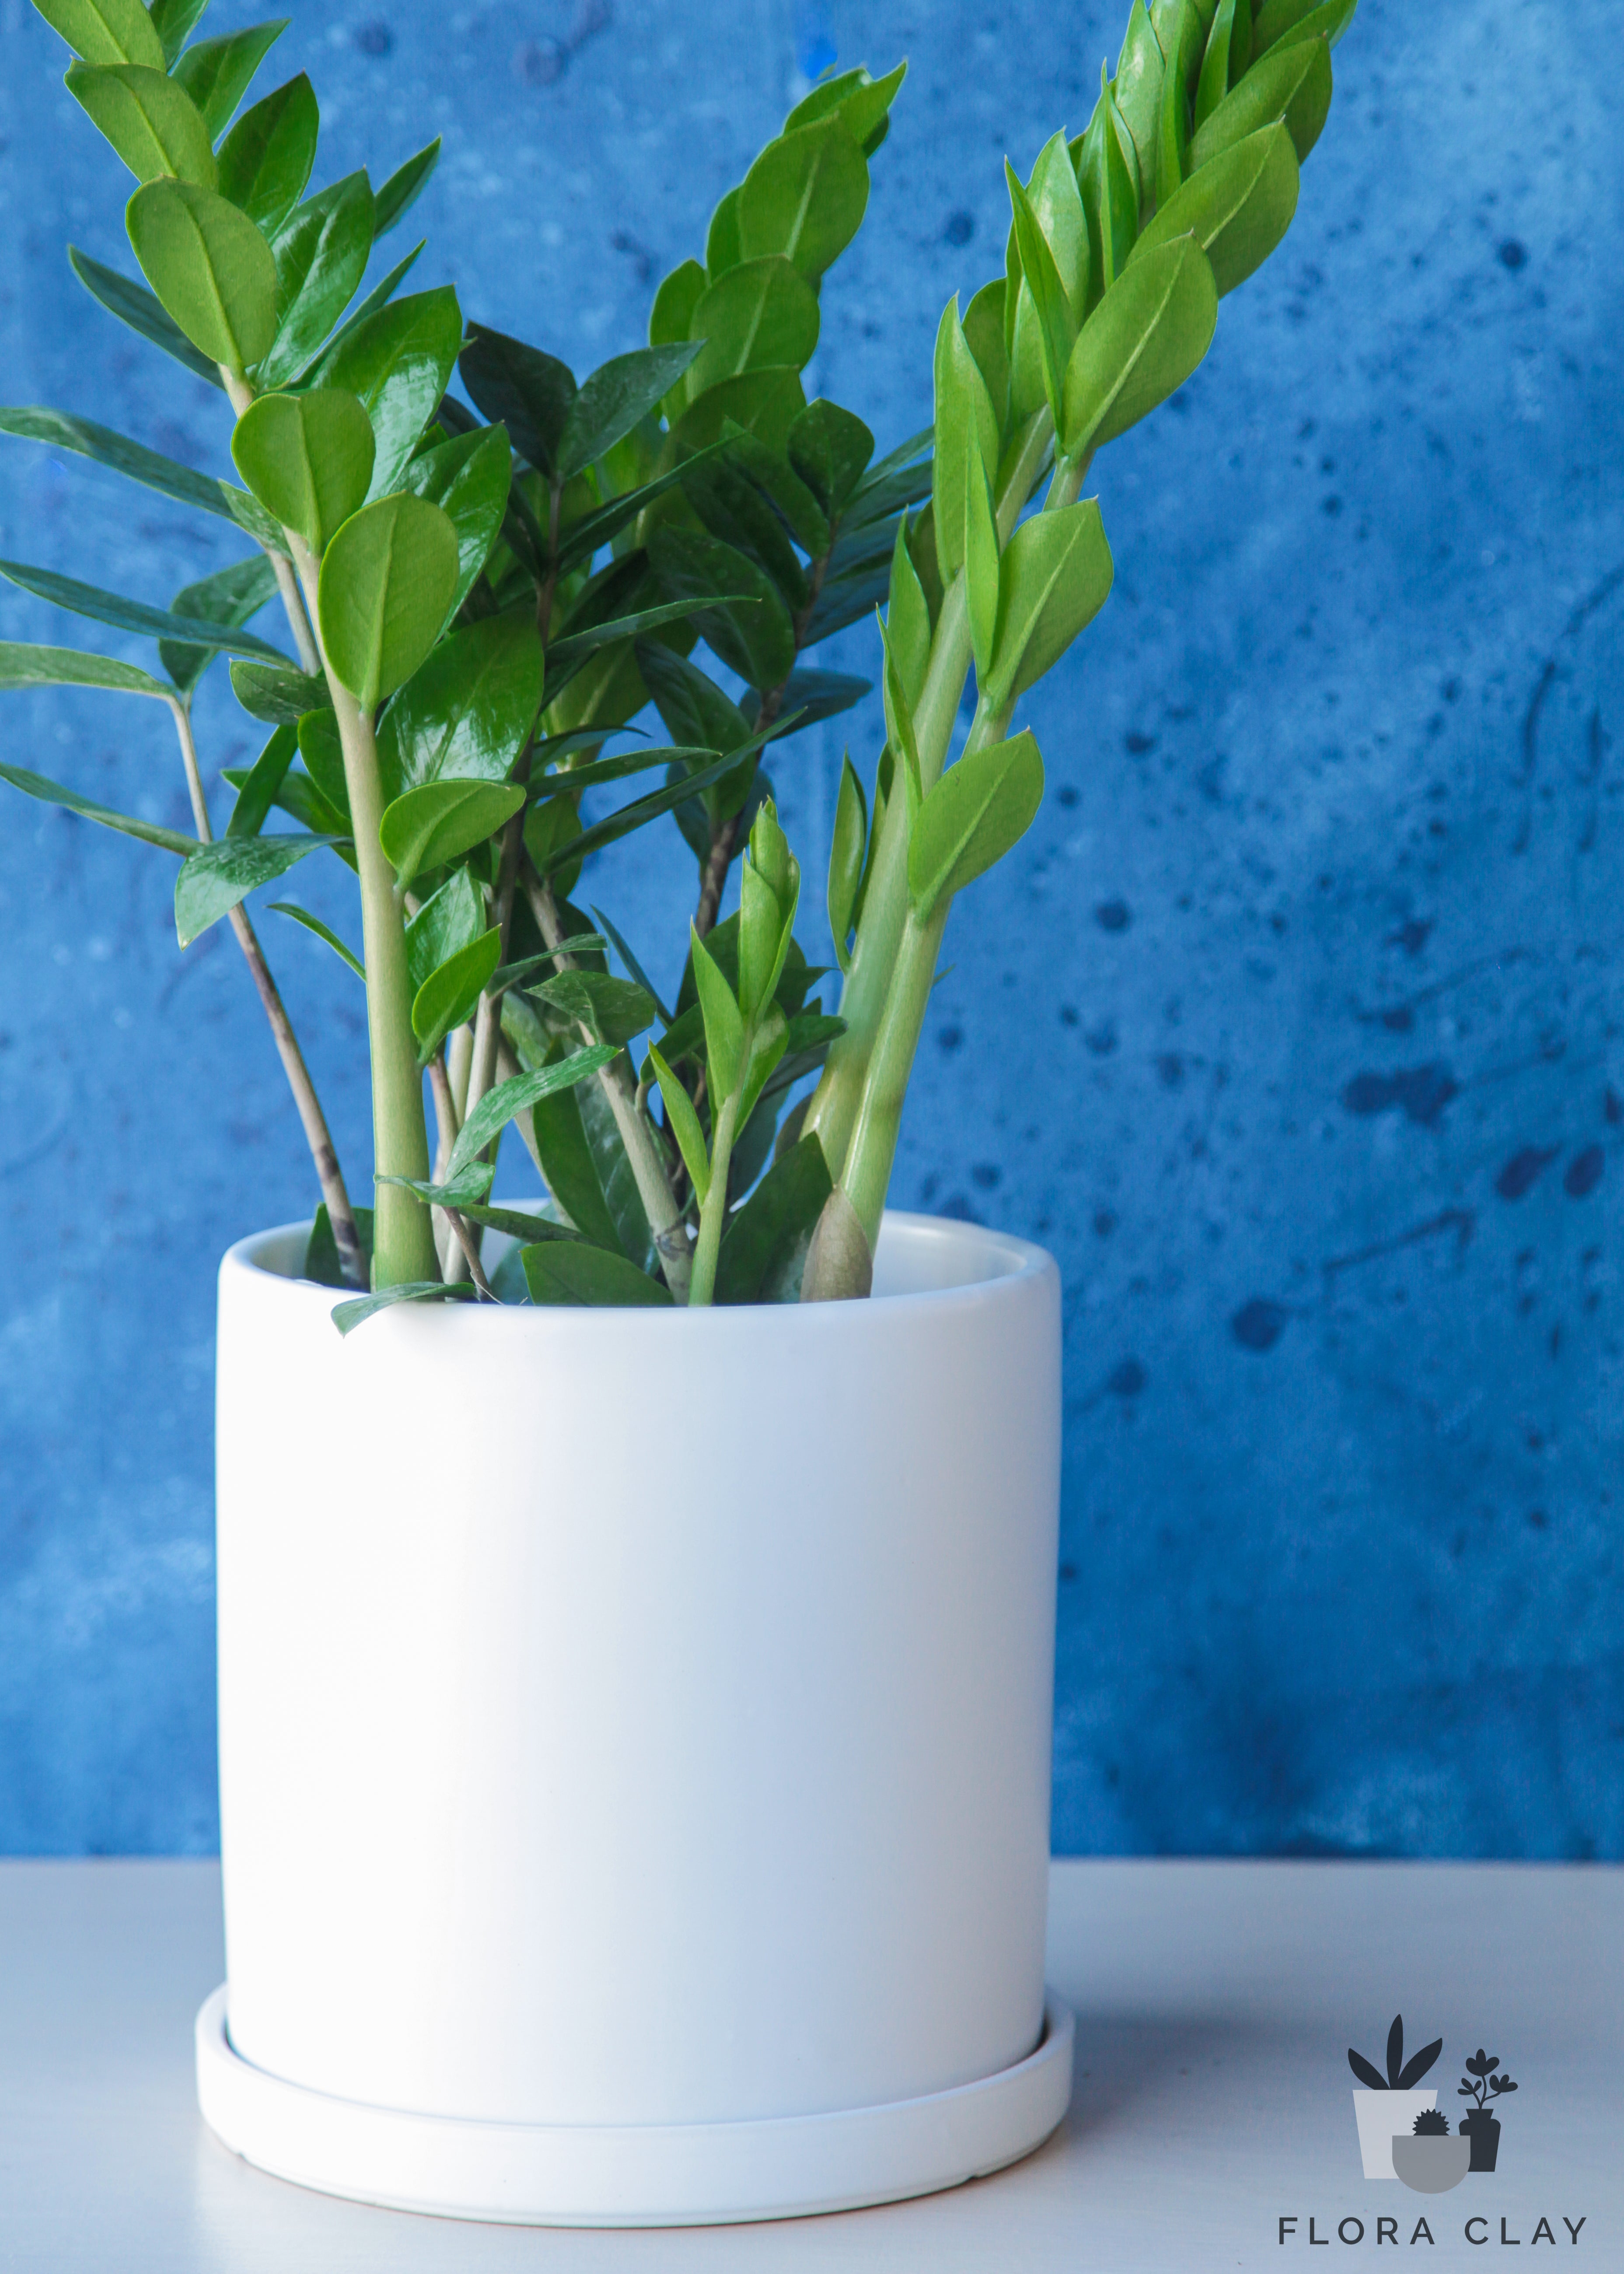 zz-white-ceramic-plant-arrangement-floraclay-2.jpg